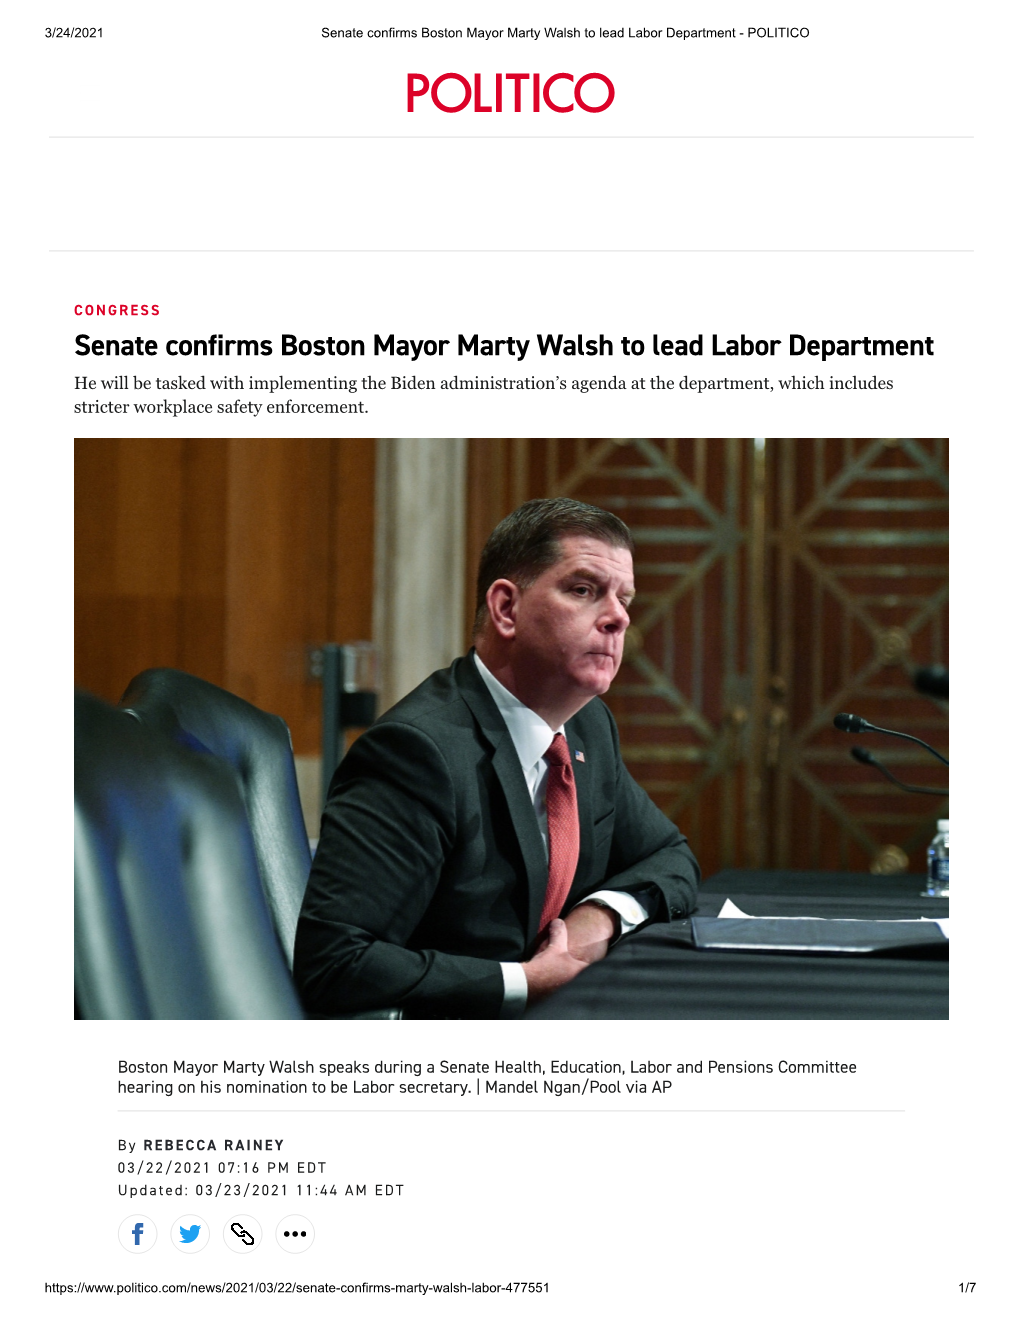 Senate Confirms Boston Mayor Marty Walsh to Lead Labor Department - POLITICO